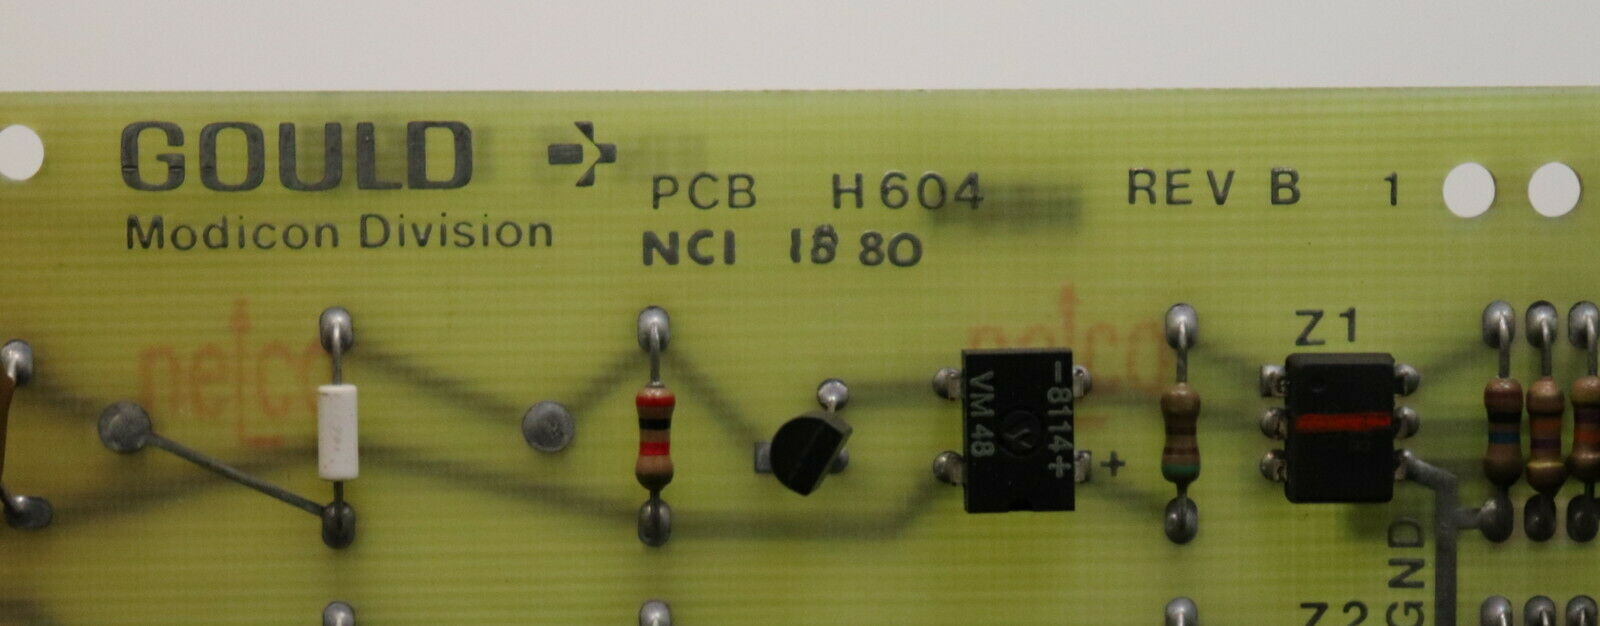 GOULD MODICON Input module B651 115VAC PCB H604 REV B NCI 15 80